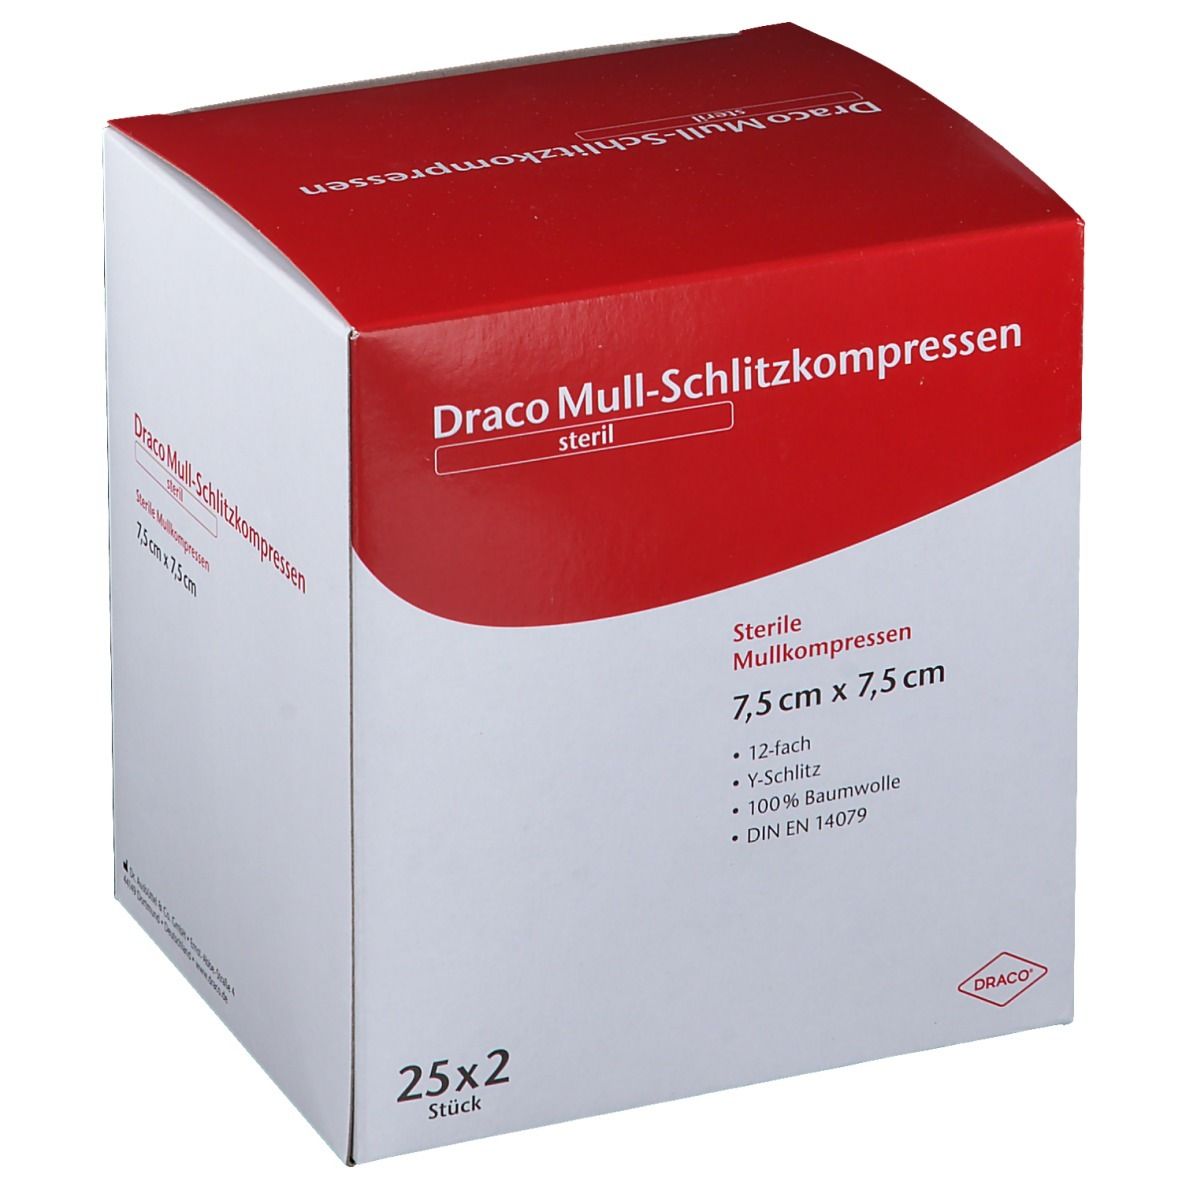 Draco Mull-Schlitzkompressen 12fach 7,5 x 7,5 cm steril